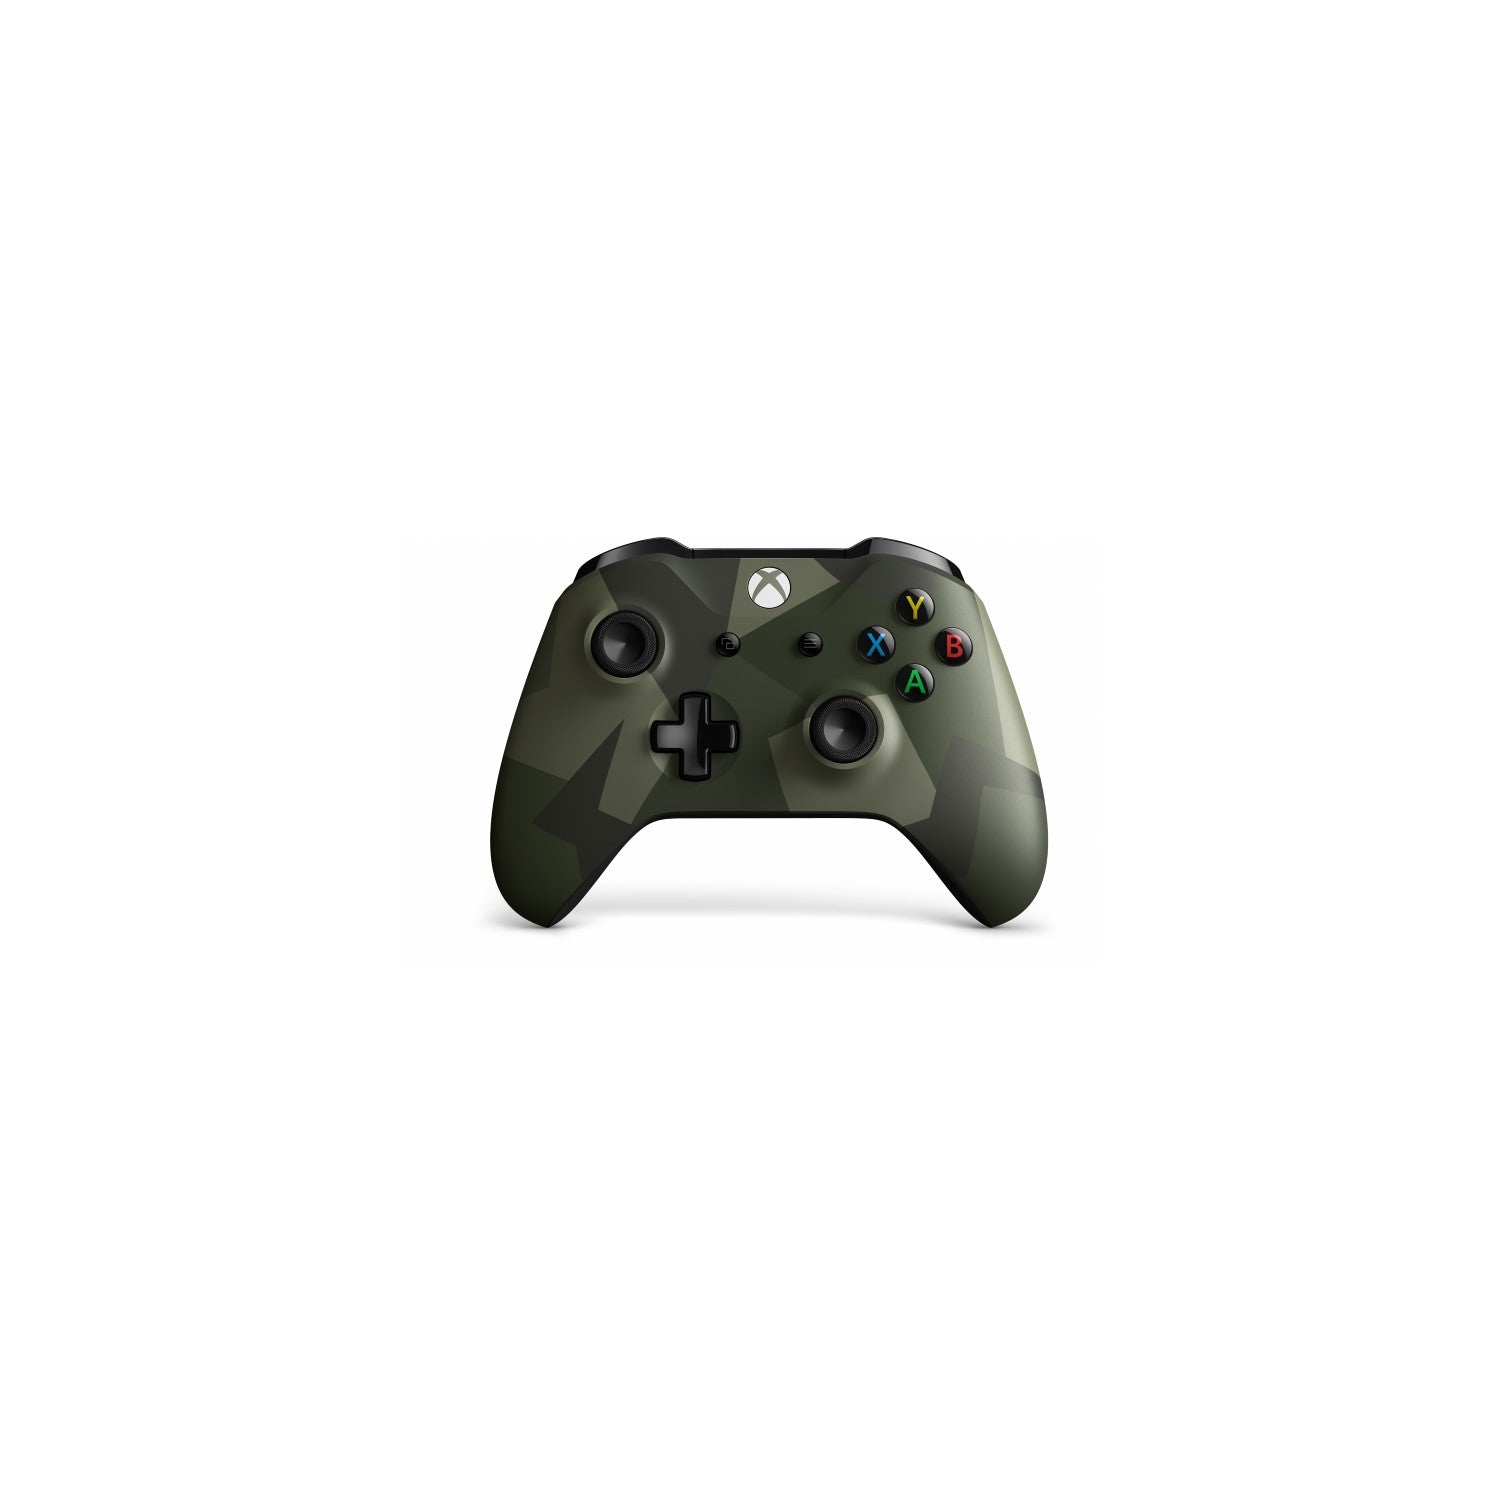 Microsoft Xbox One S Wireless Controller, Green/Camo